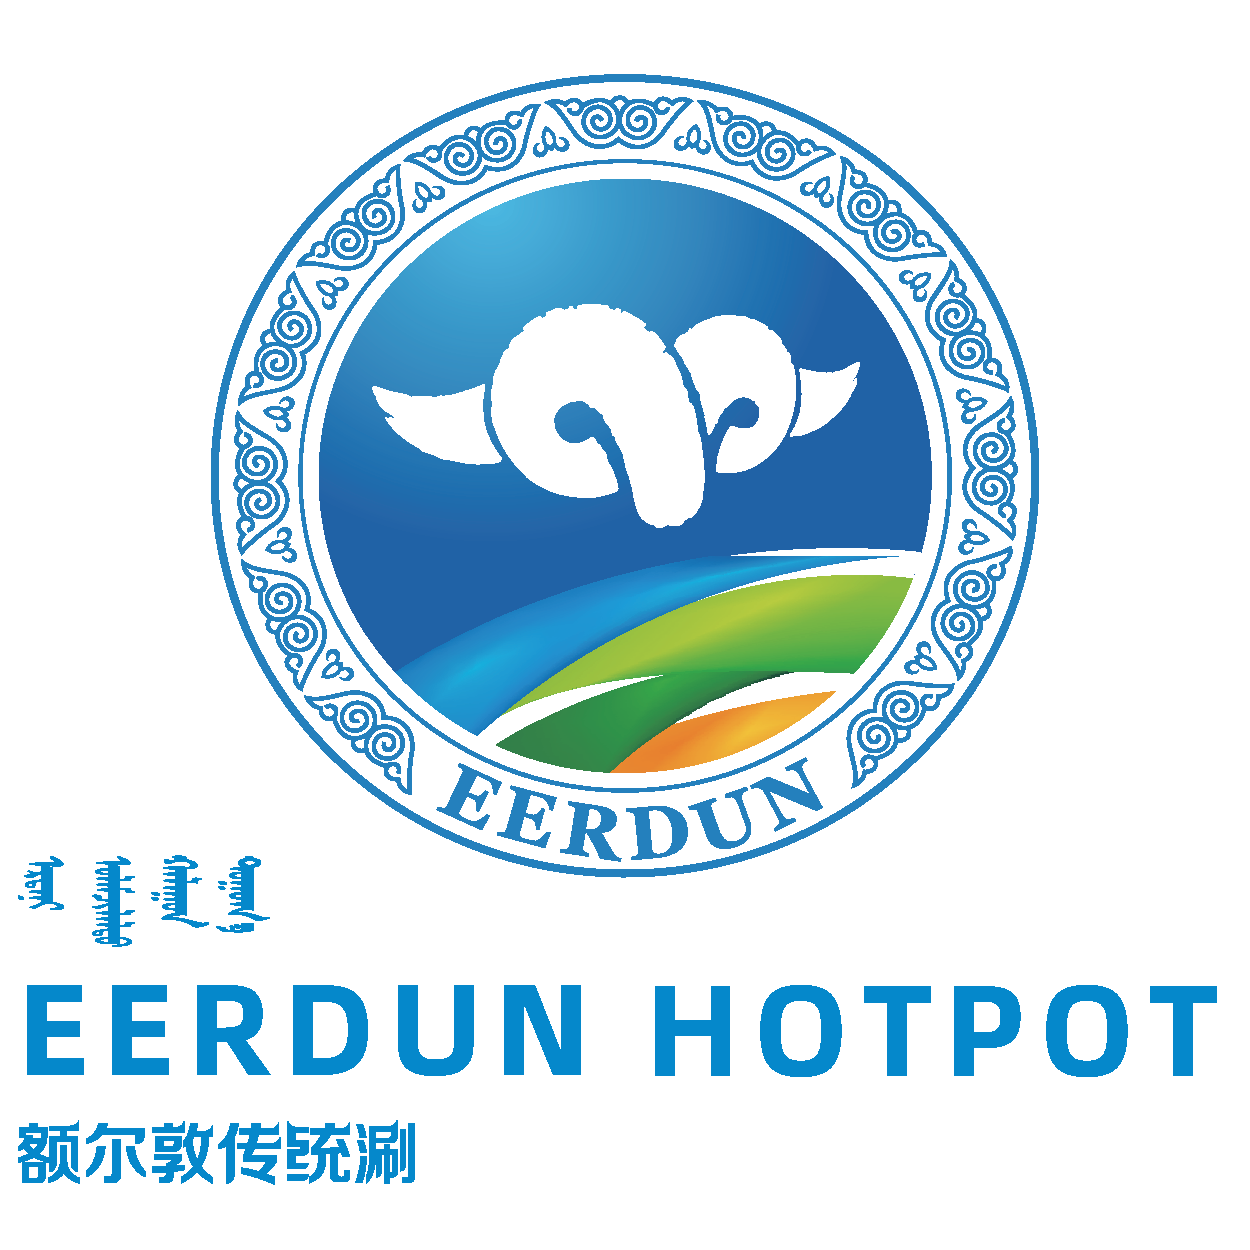 Eerdun Hotpot Logo